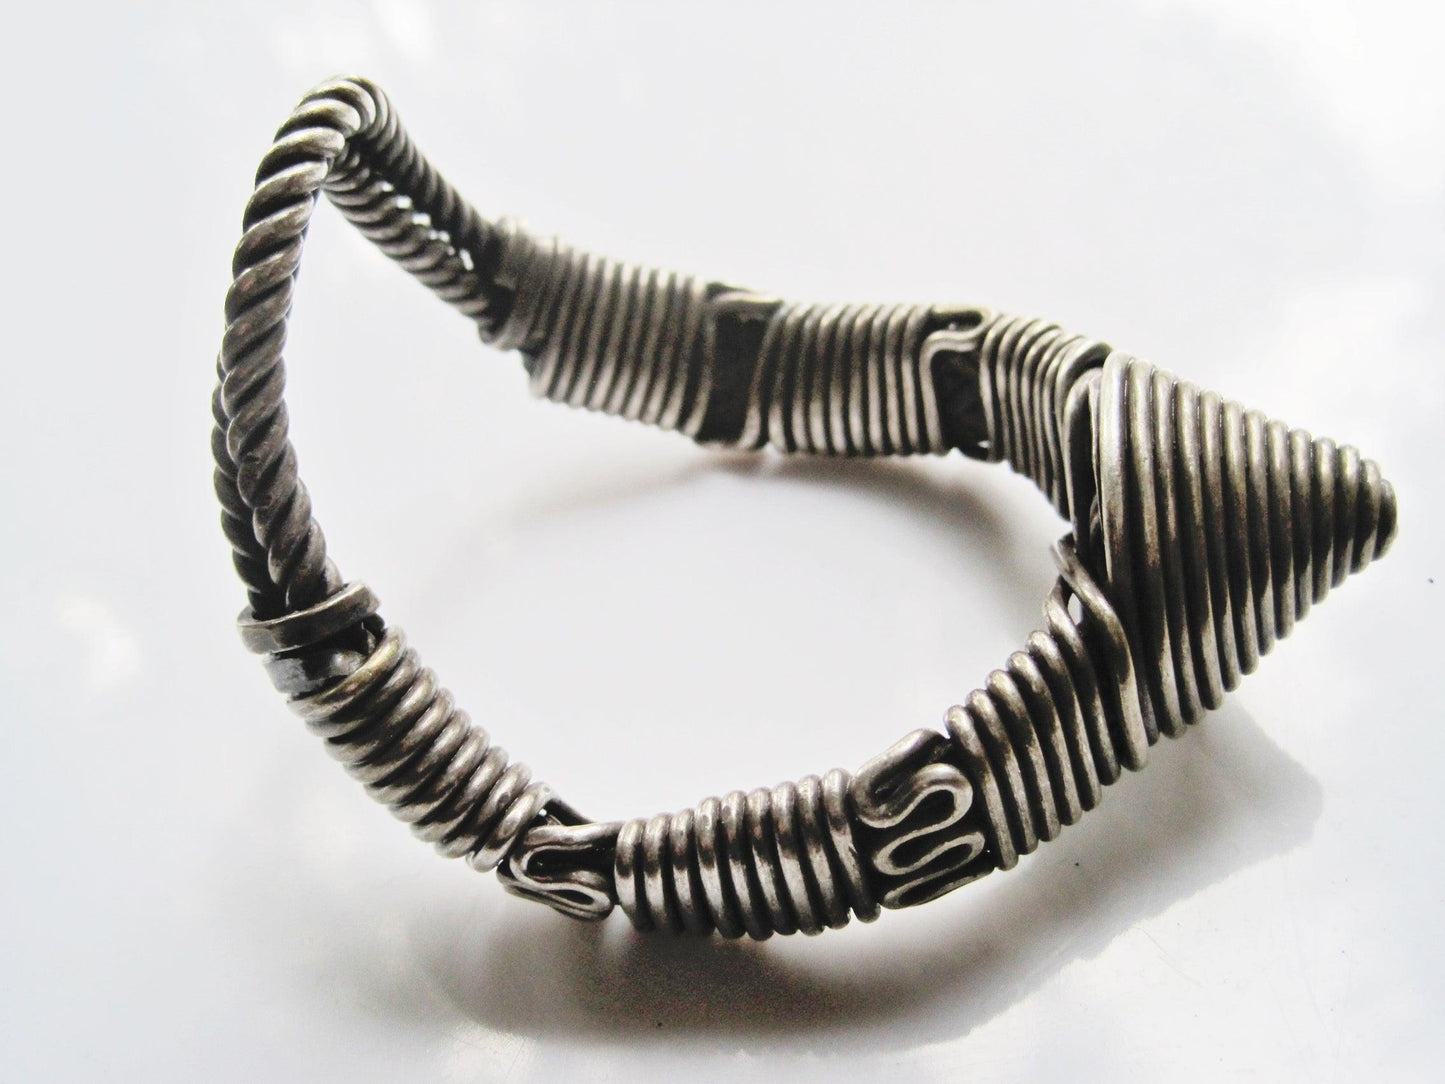 Silver Rigid V Shaped Bracelet or Armlet from India - Anteeka